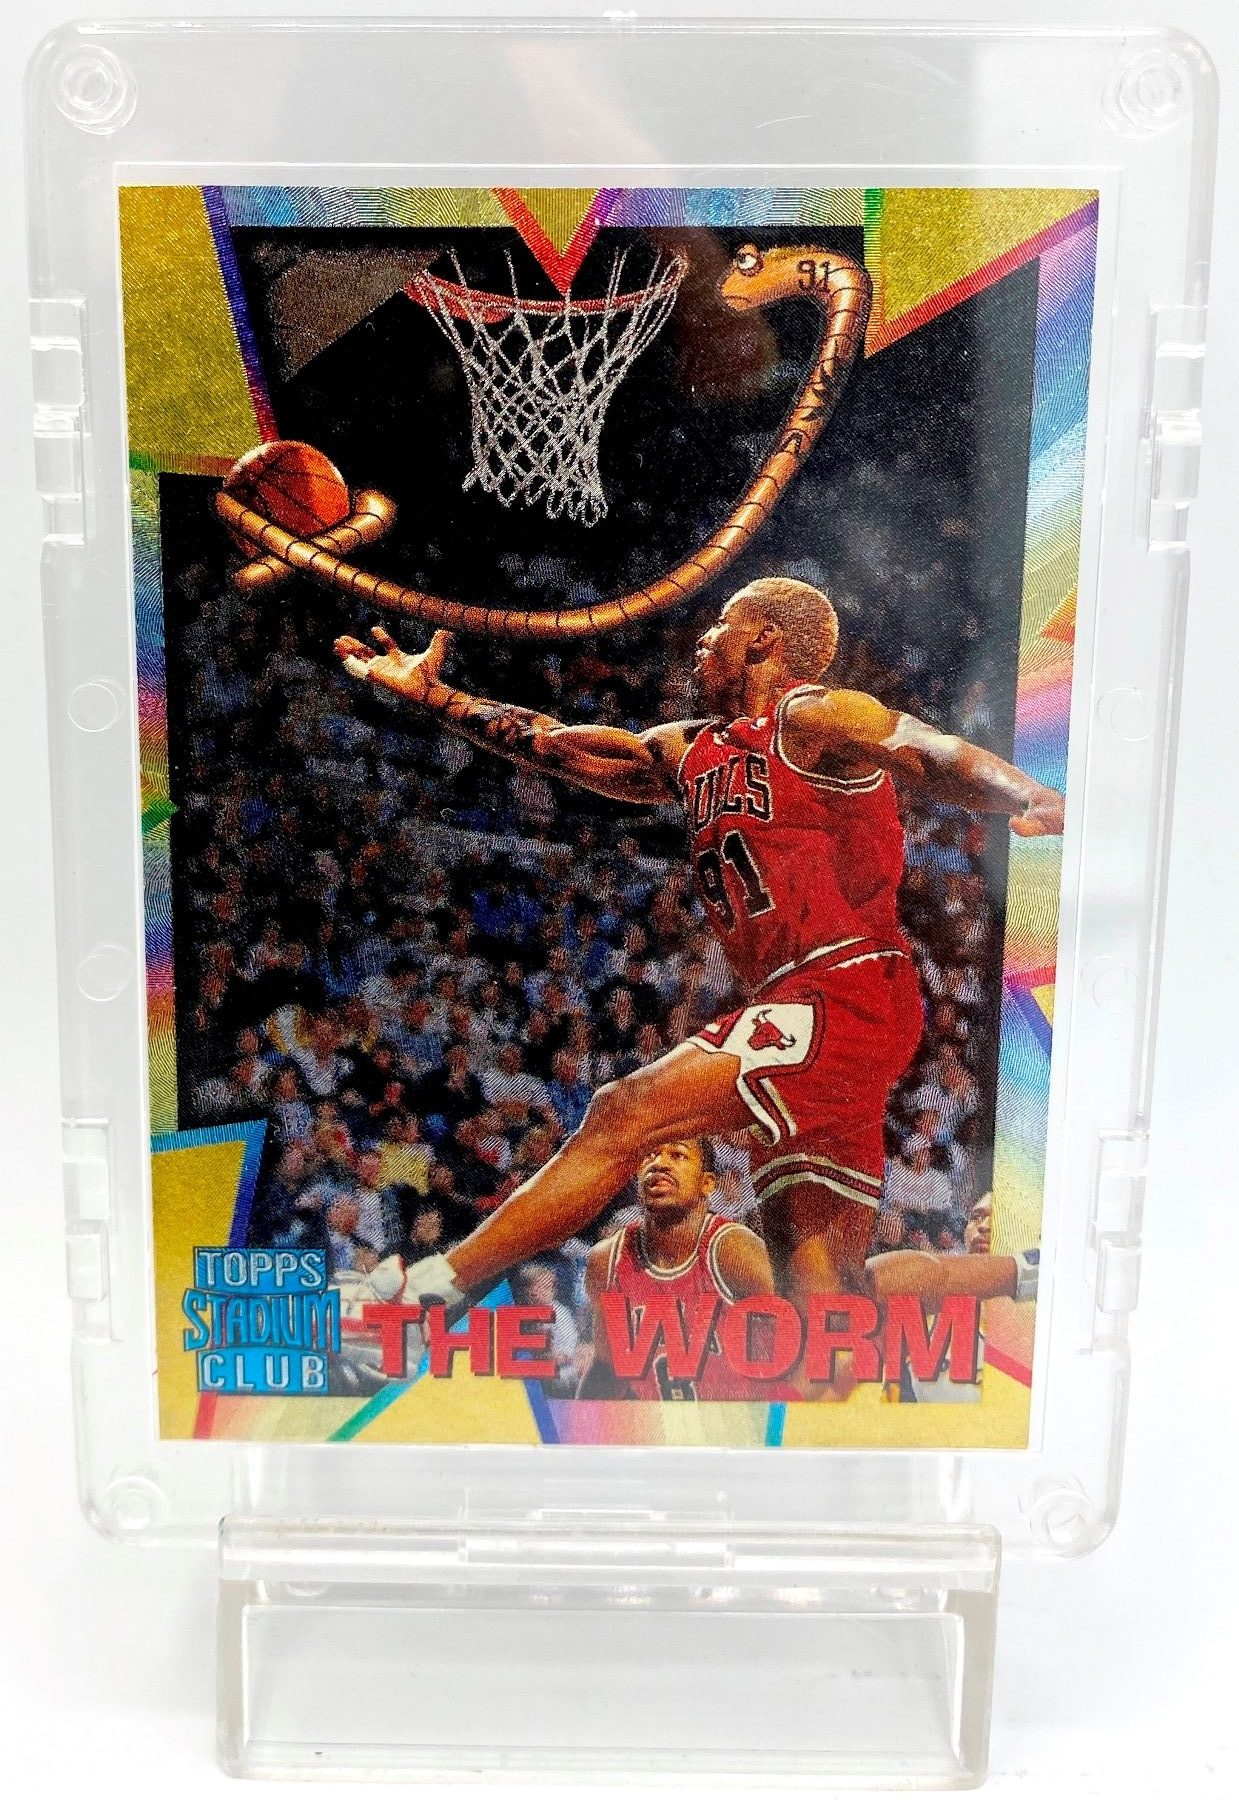 1997 Topps Stadium Club Mega Heroes Collection Dennis Rodman (THE WORM) Bulls Chrome Card #MH1) (1pc) (1)